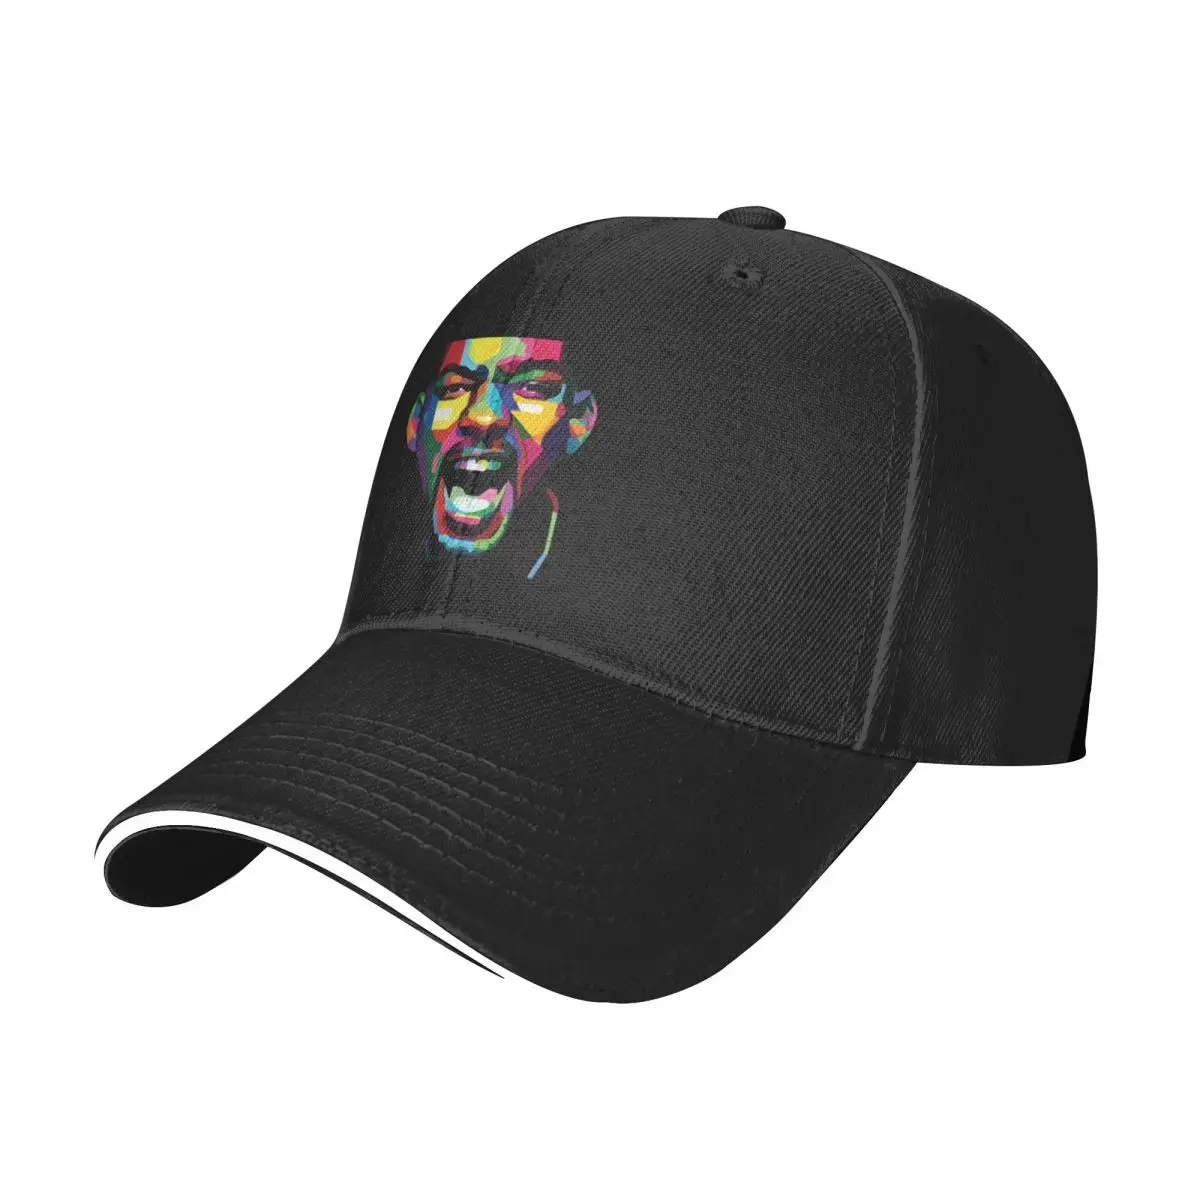 Amazing Wpap Will Smith Baseball Cap bastille fresh music popart colorful Kpop Hot Sale Trucker Hat Fitted Men Baseball Caps